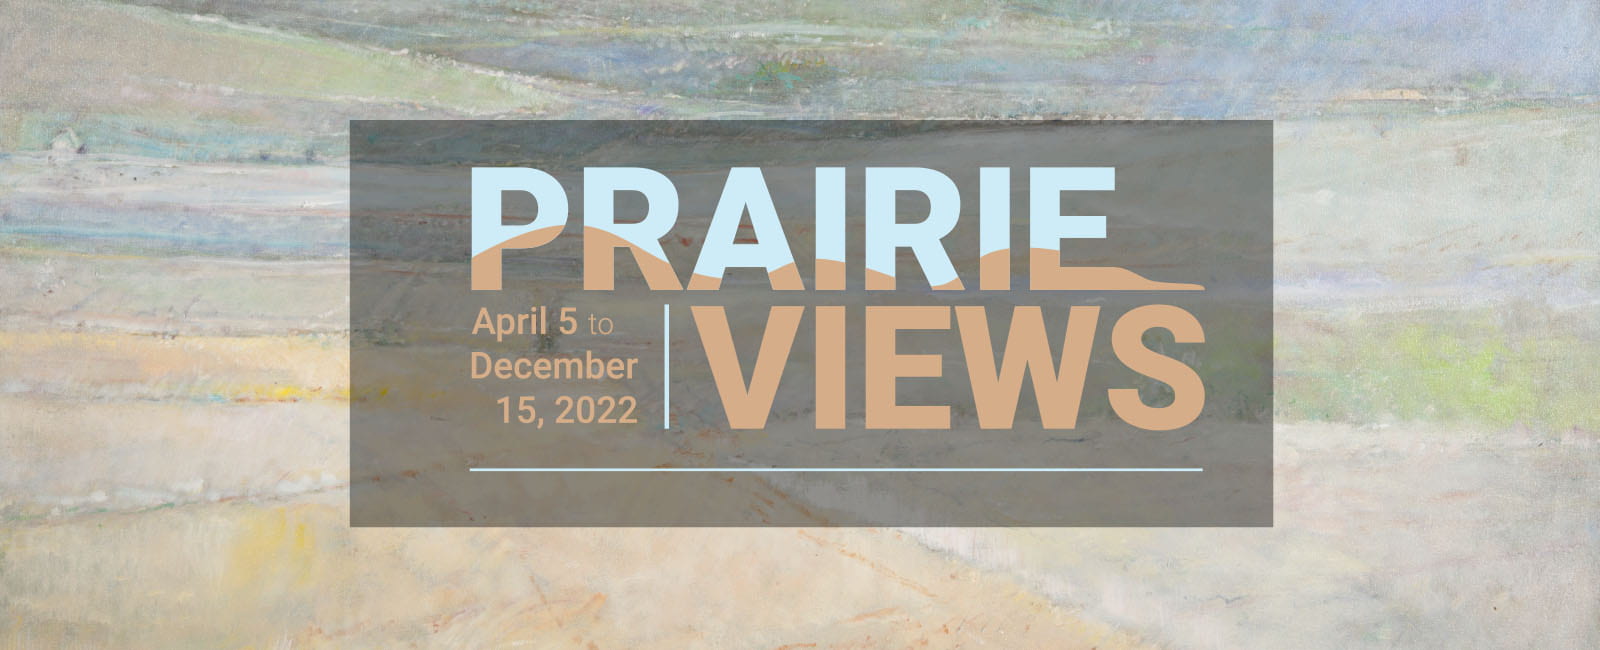 "Prairie Views" exhibition at the Beach Museum of Art.